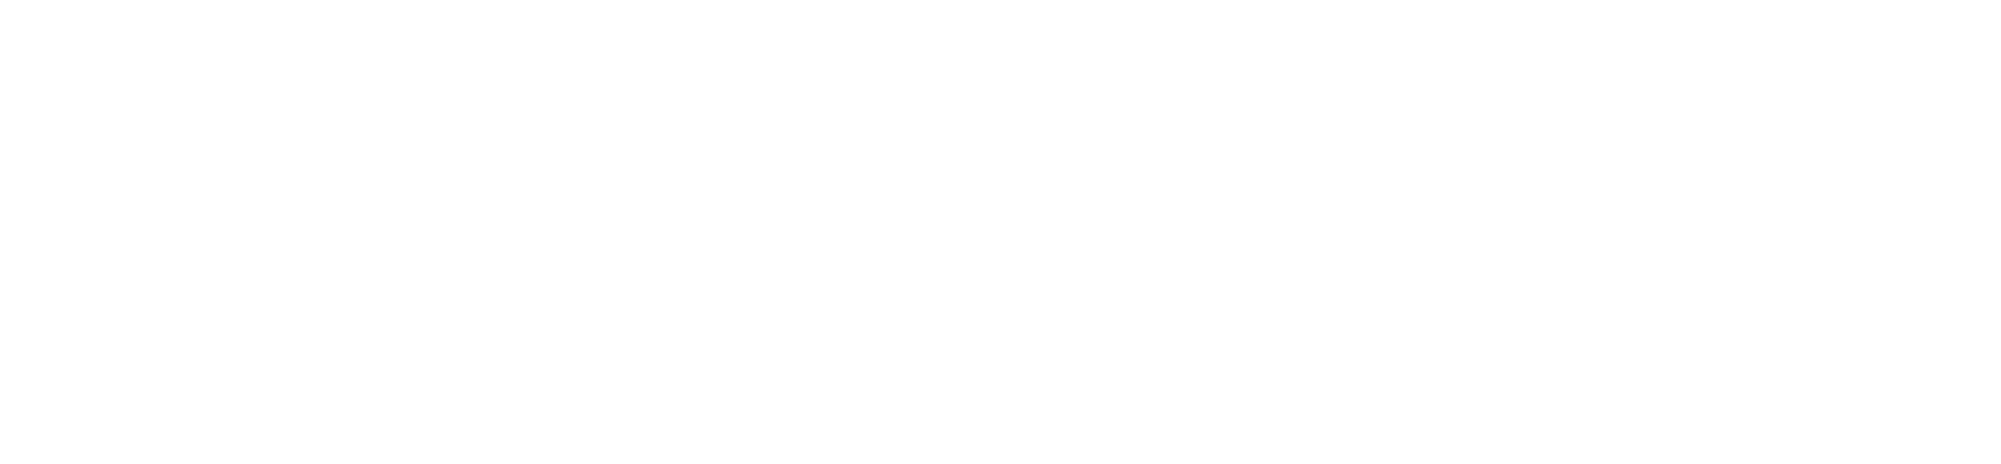 Moogsoft Logo